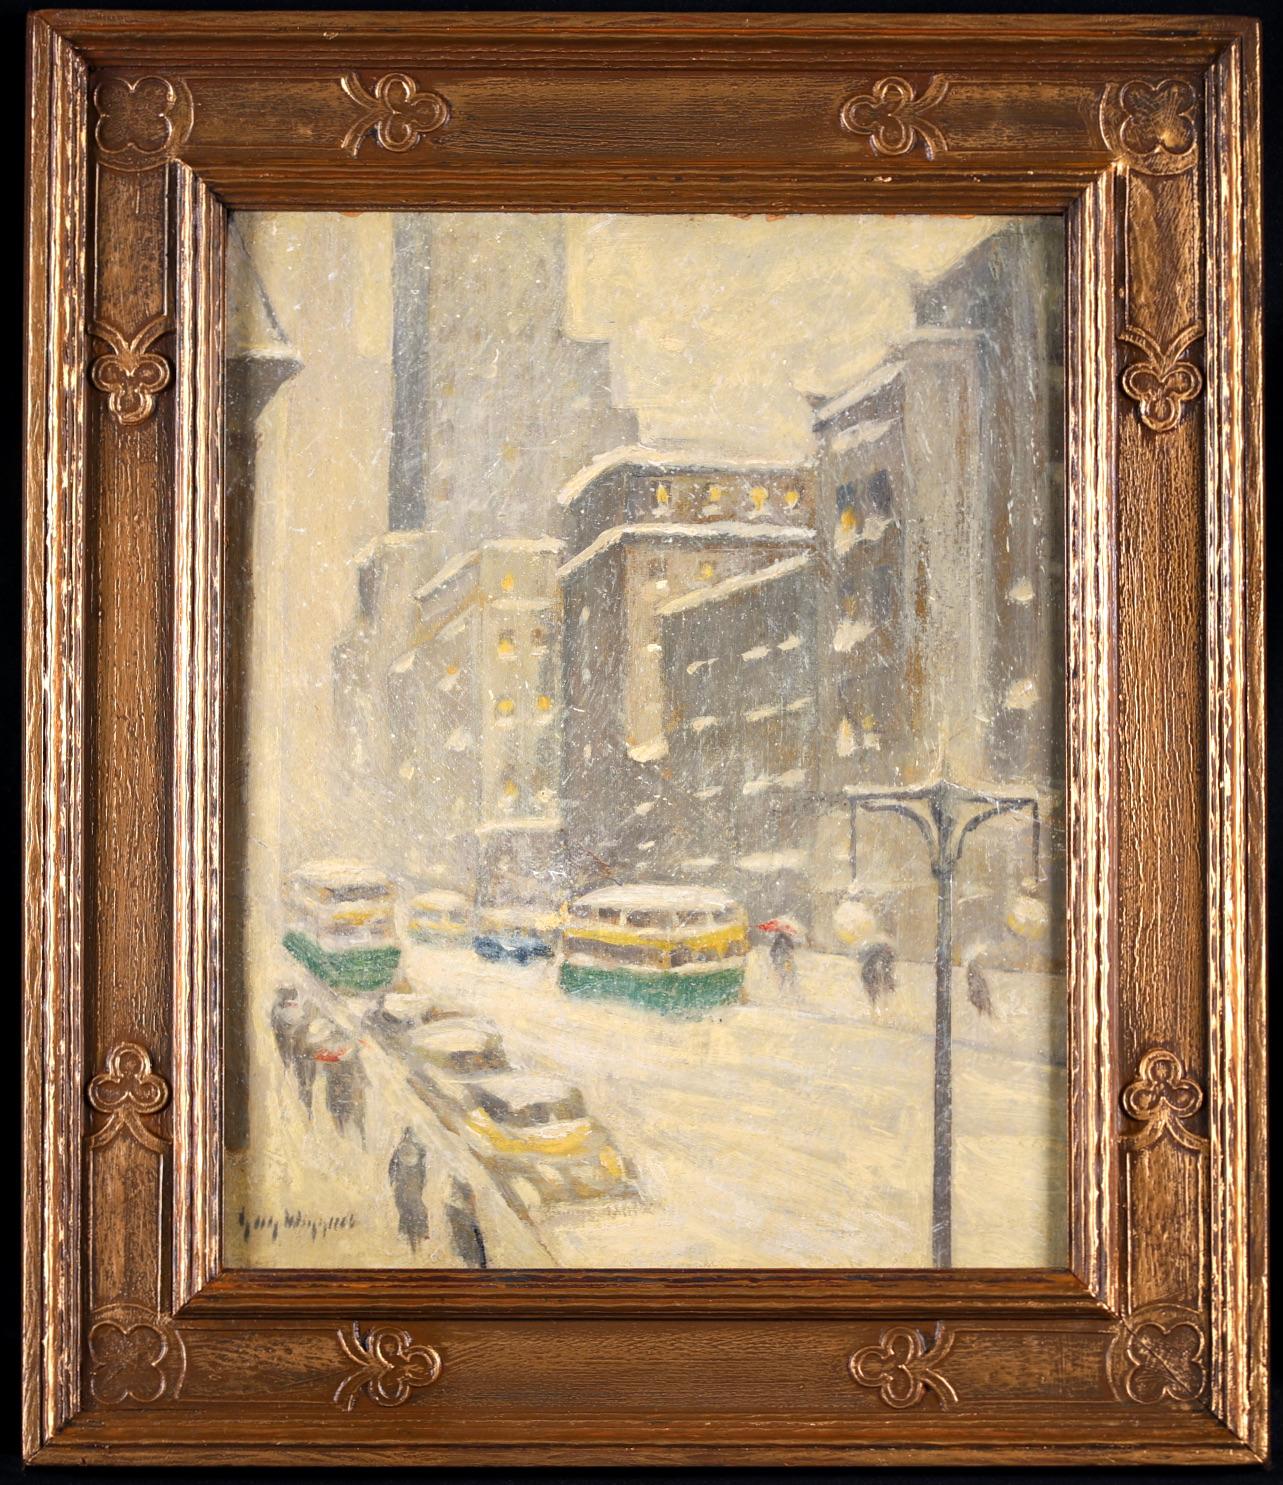 Guy Carleton Wiggins Landscape Painting - Midtown Storm - New York - Impressionist Oil, Snowy Cityscape by Guy Wiggins